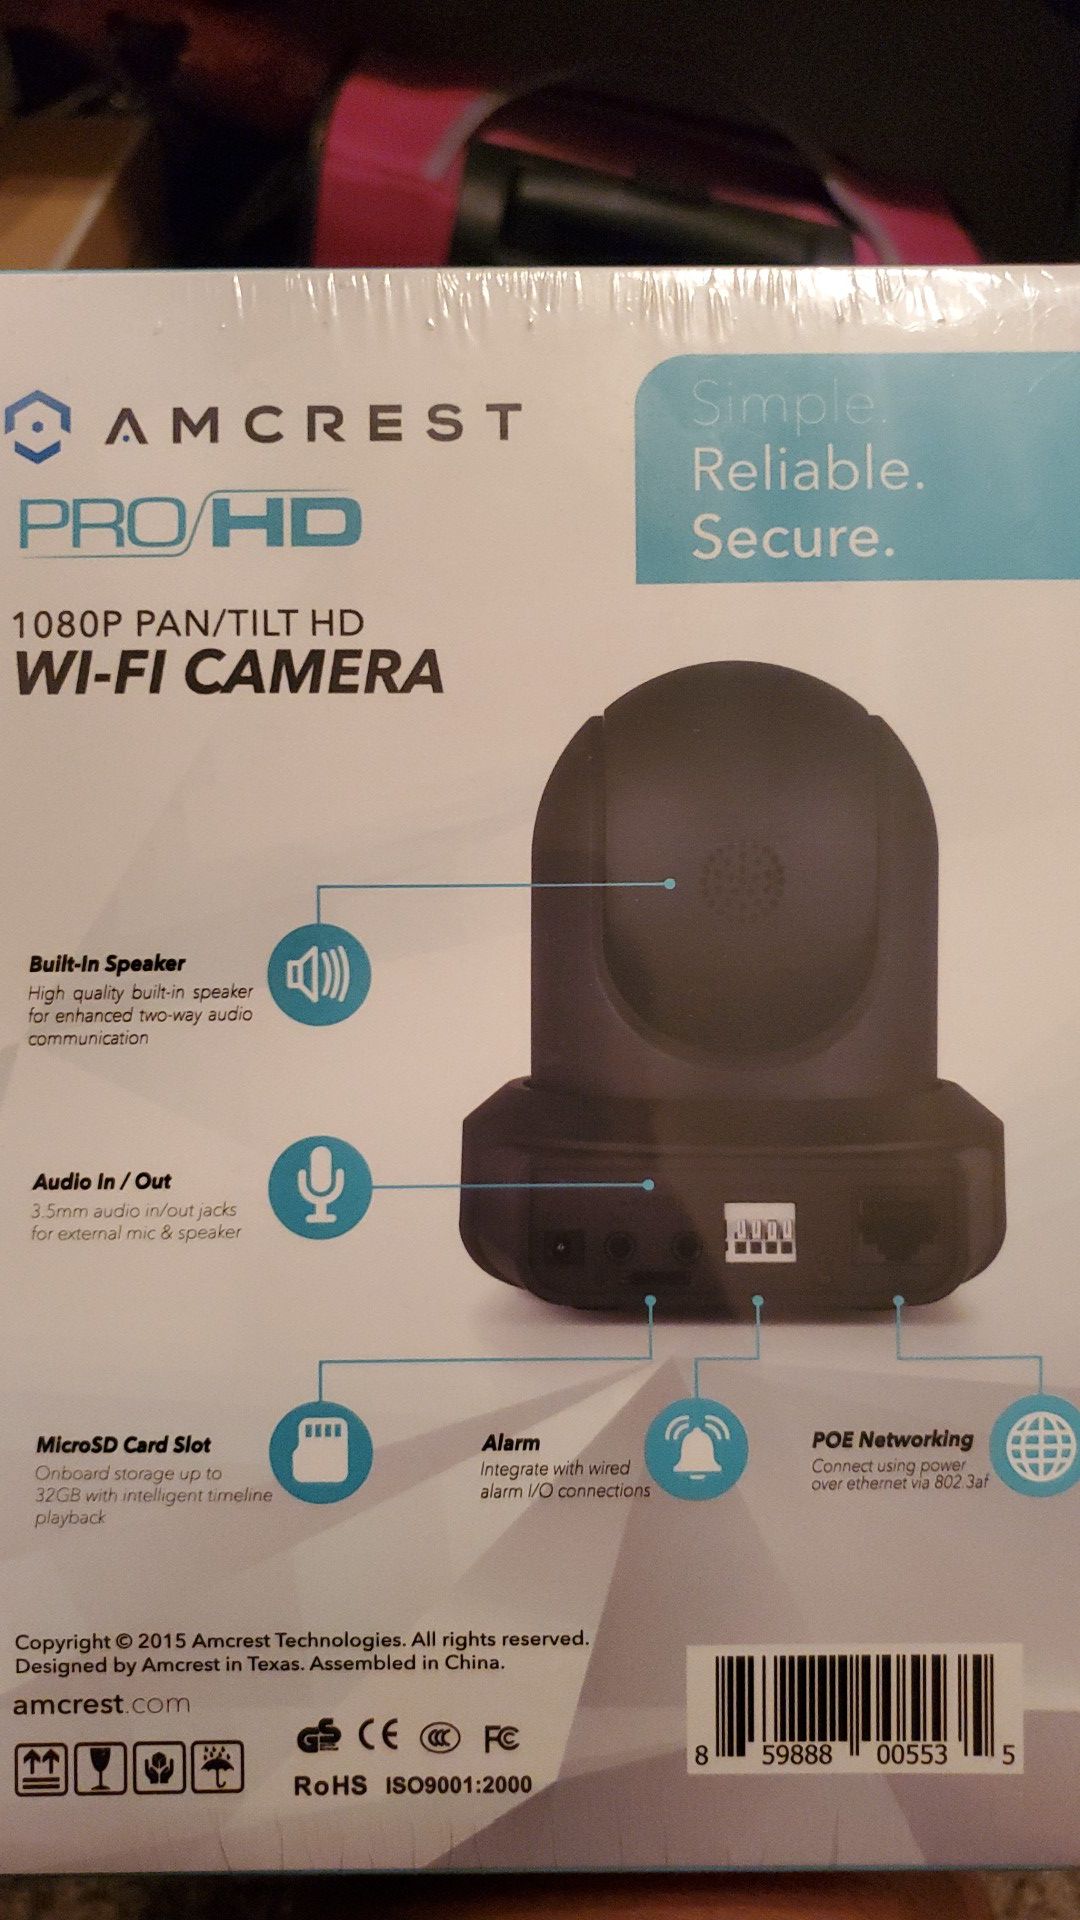 Amcrest Pro HD 1080p Pan/Tilt Wi-Fi Camera